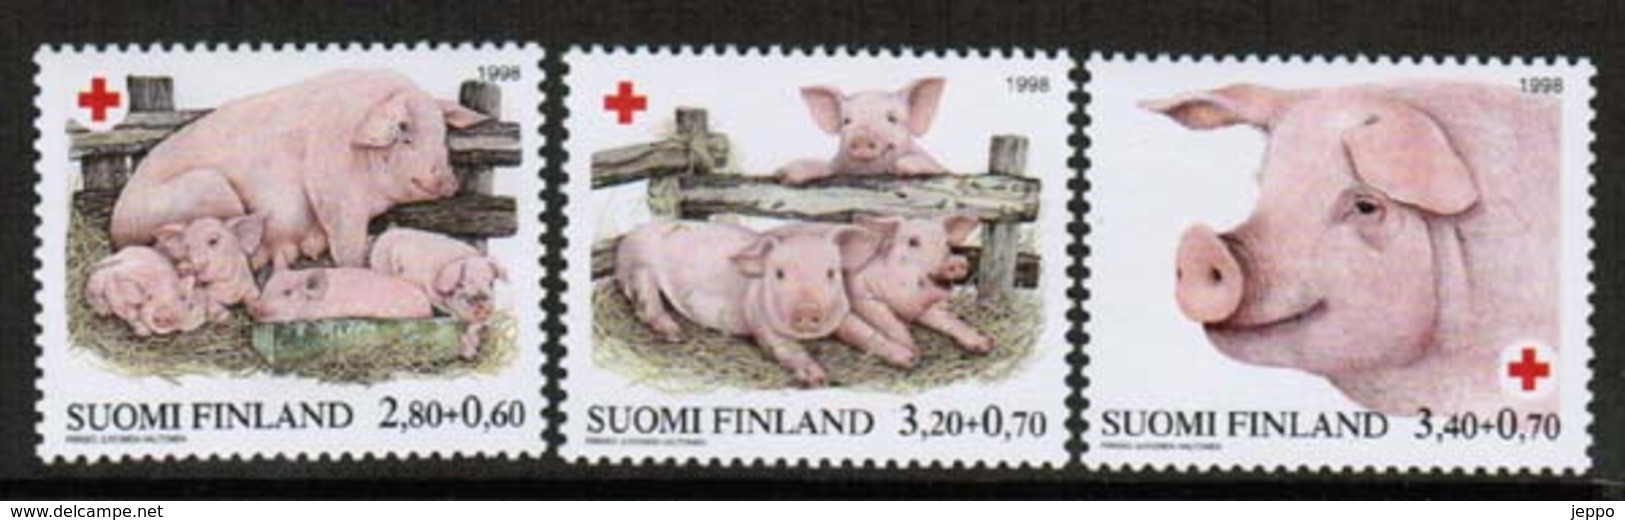 1998 Finland Red Cross Animals, Pigs Complete Set MNH. - Ungebraucht